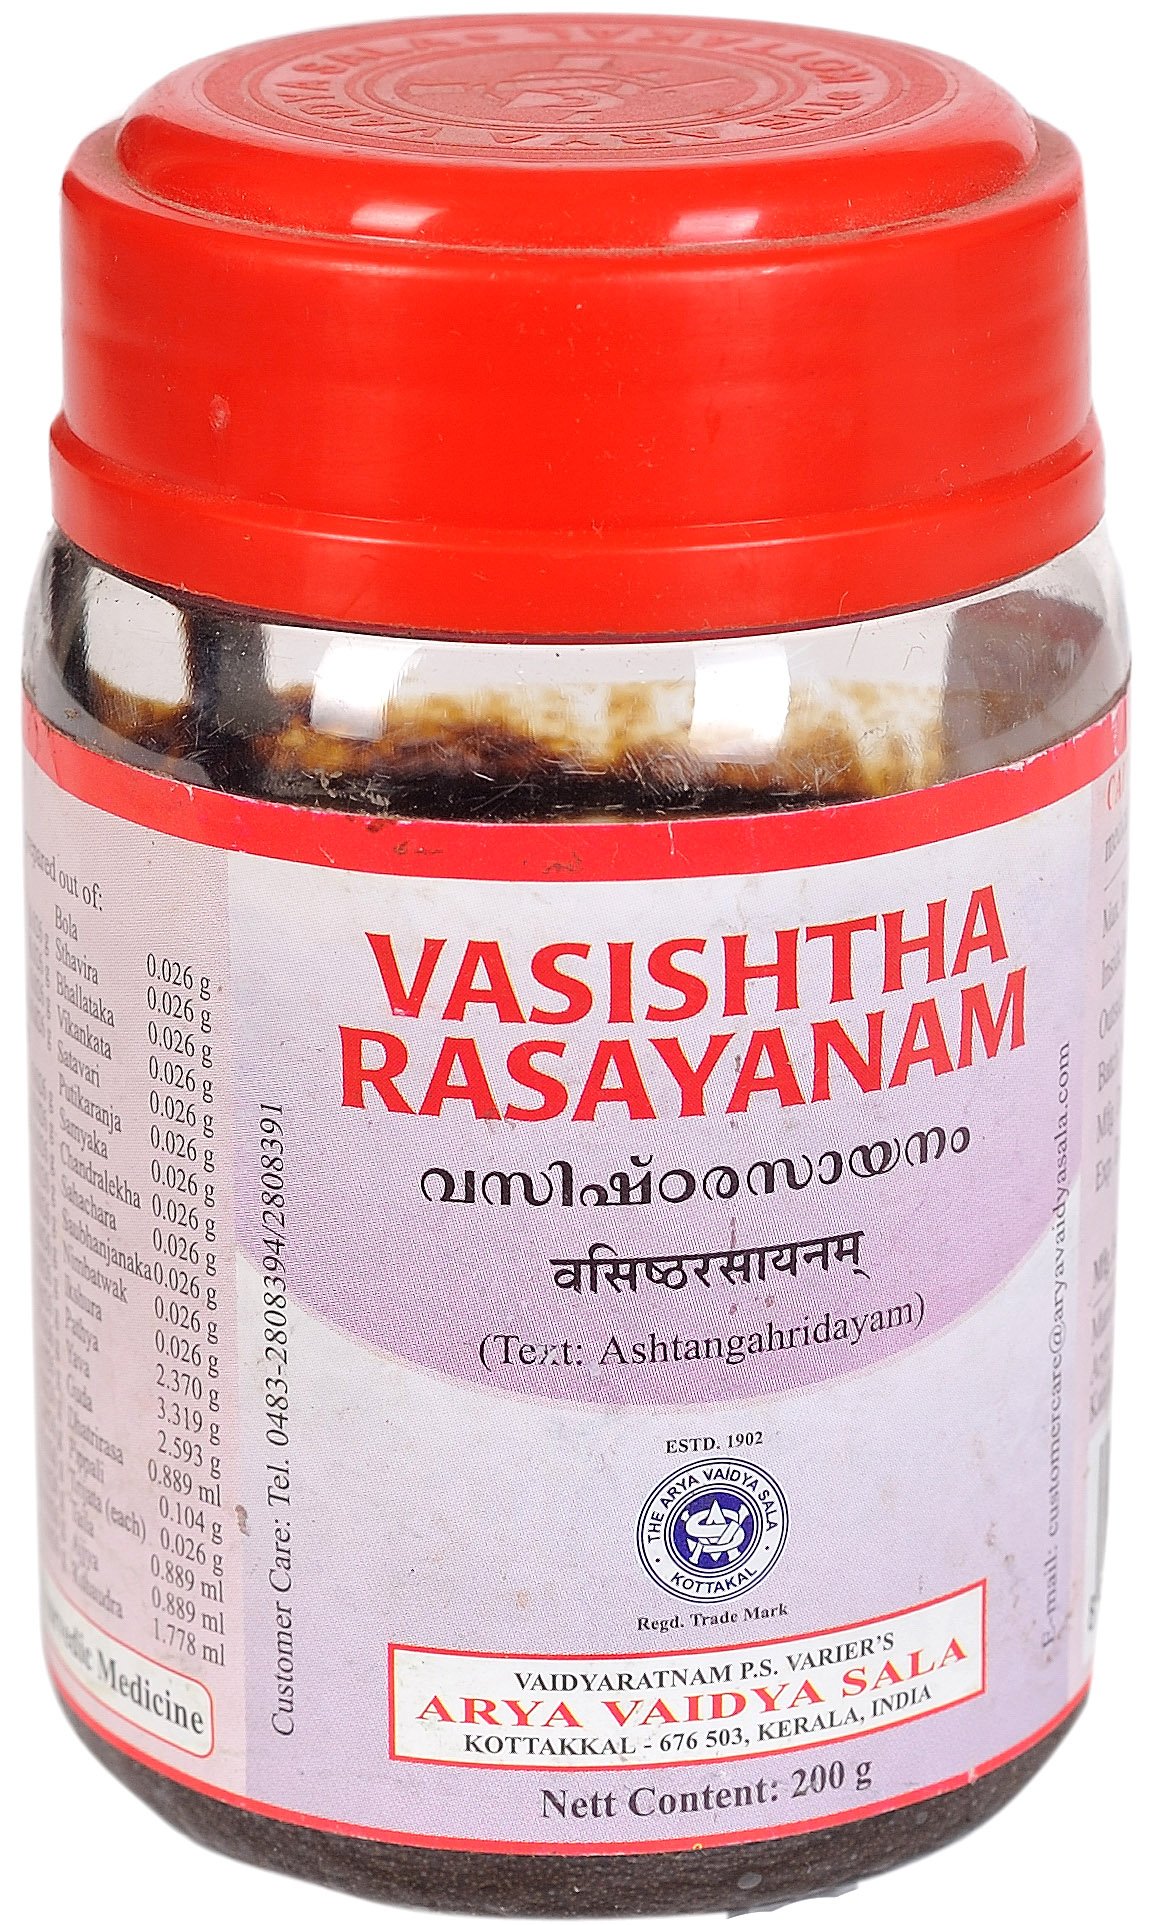 Vasishtha Rasayanam - book cover